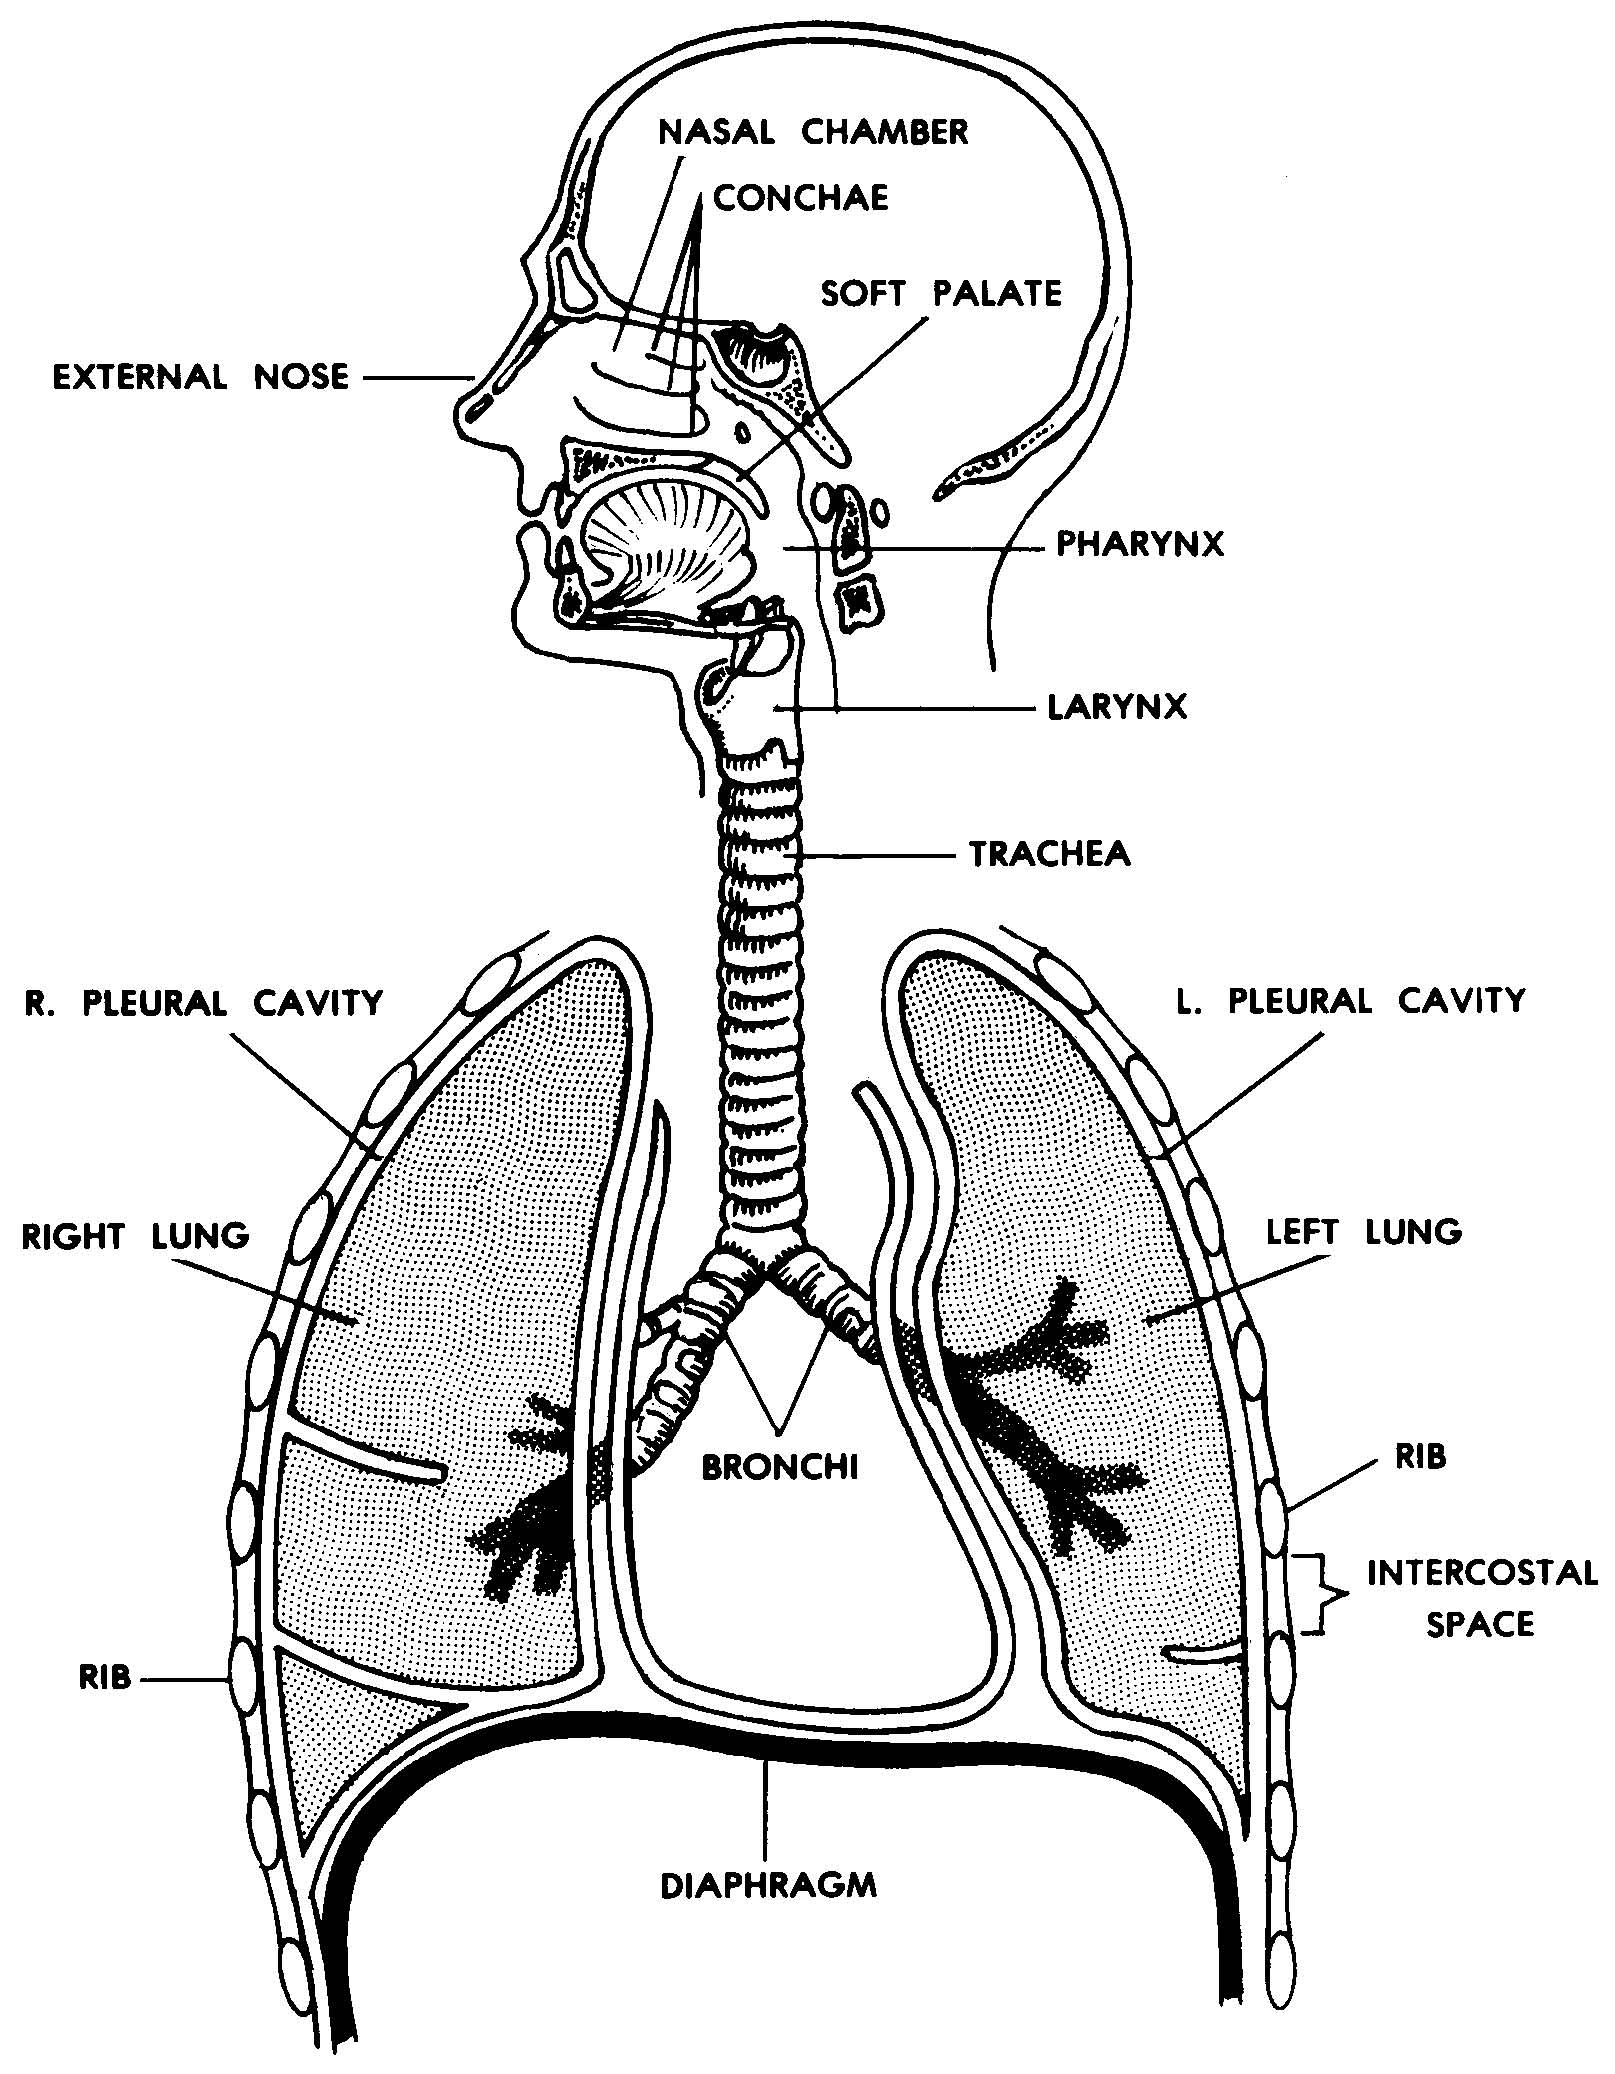 [DIAGRAM] Simple Diagram Of Human Lungs - MYDIAGRAM.ONLINE